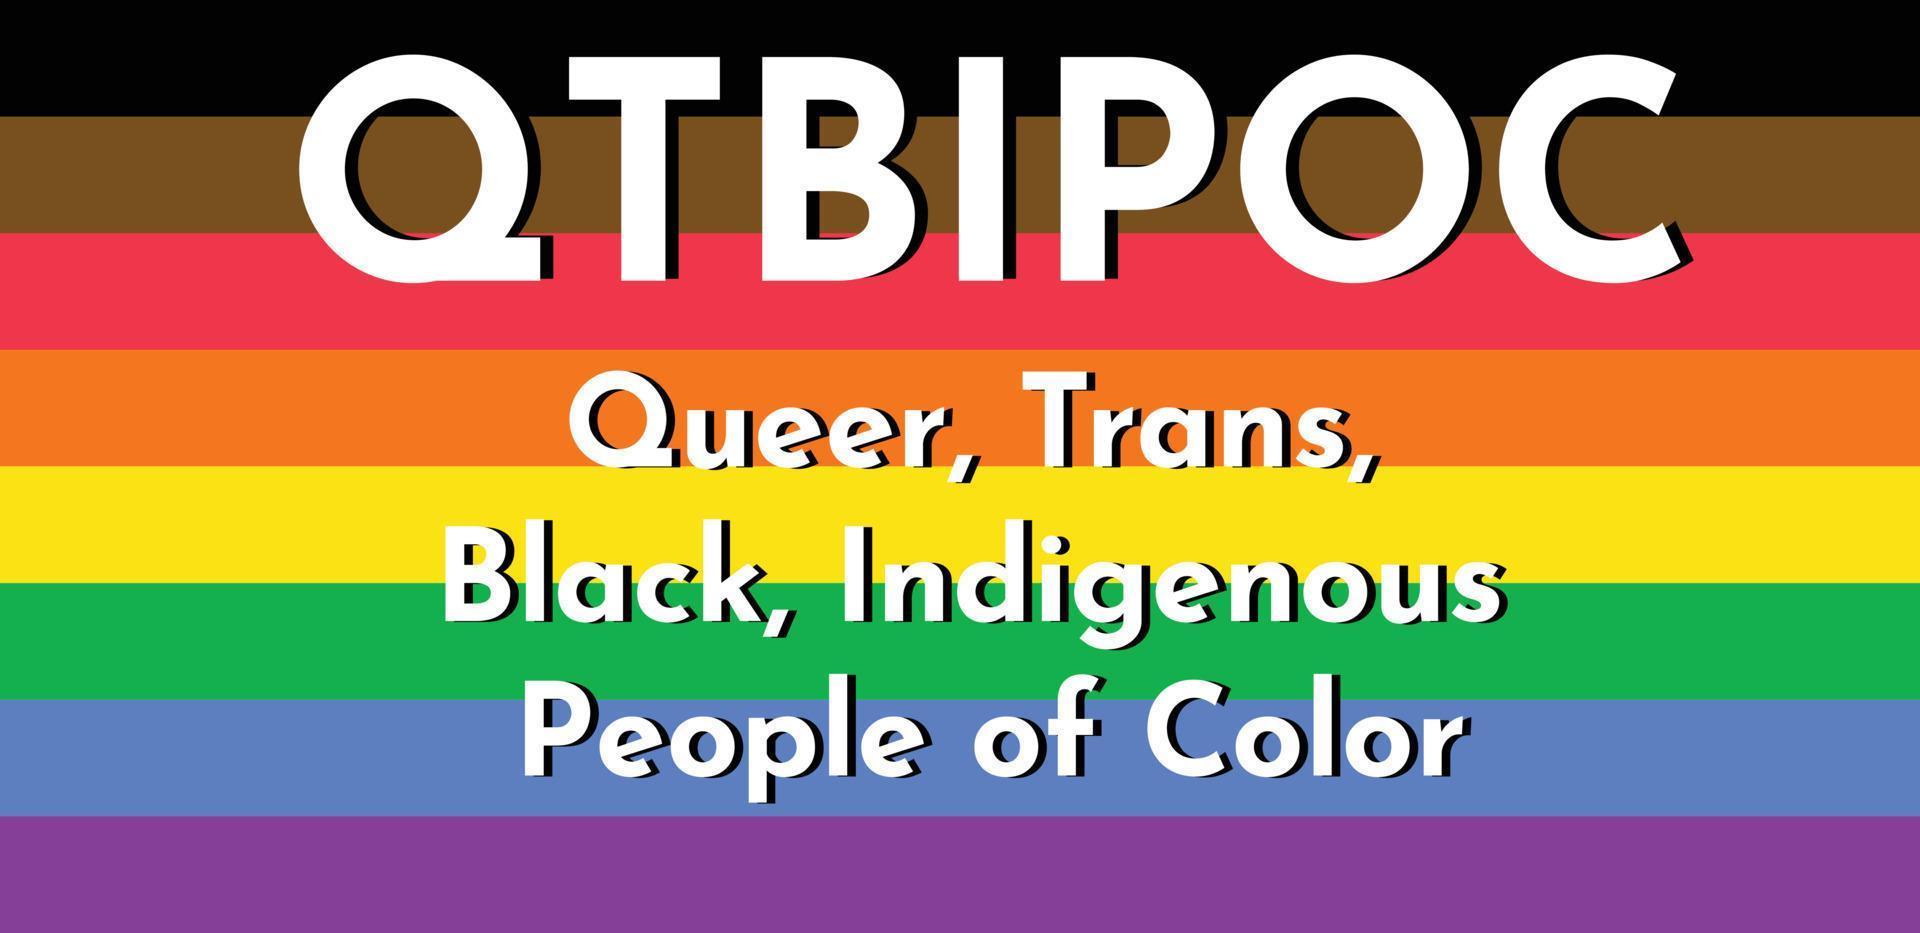 sigla qtbpoc - queer trans negros indígenas de cor. bandeira lgbtq estendida com listras pretas, marrons e arco-íris vetor